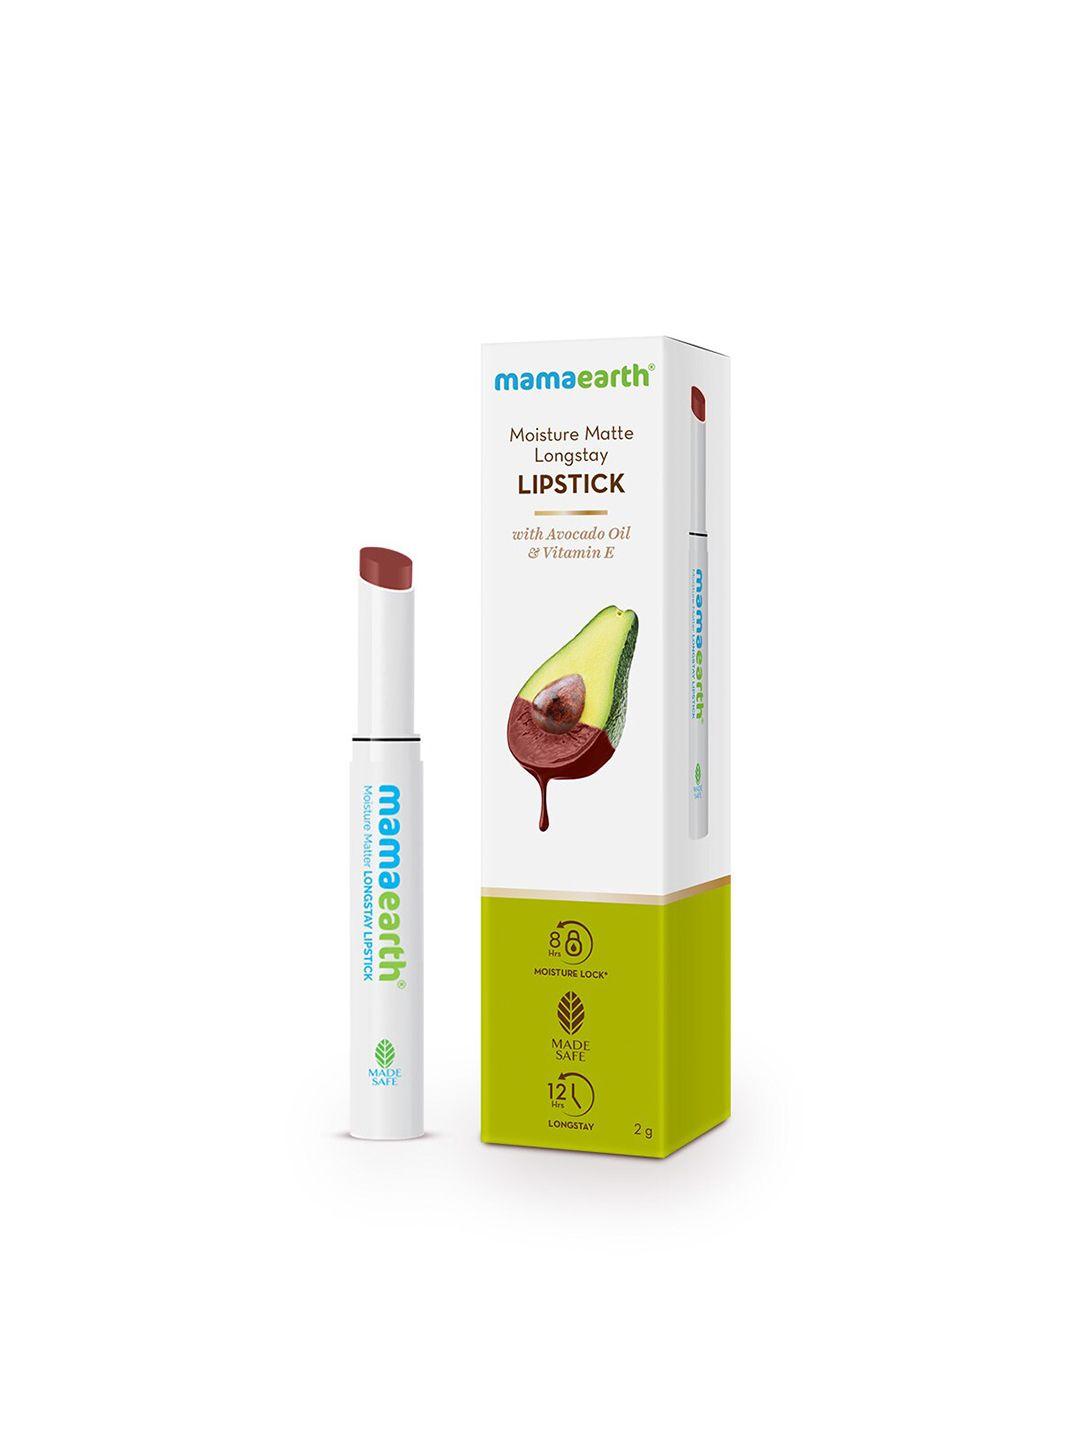 mamaearth moisture matte longstay lipstick with avocado oil & vit e 2g - hazenut brown 16